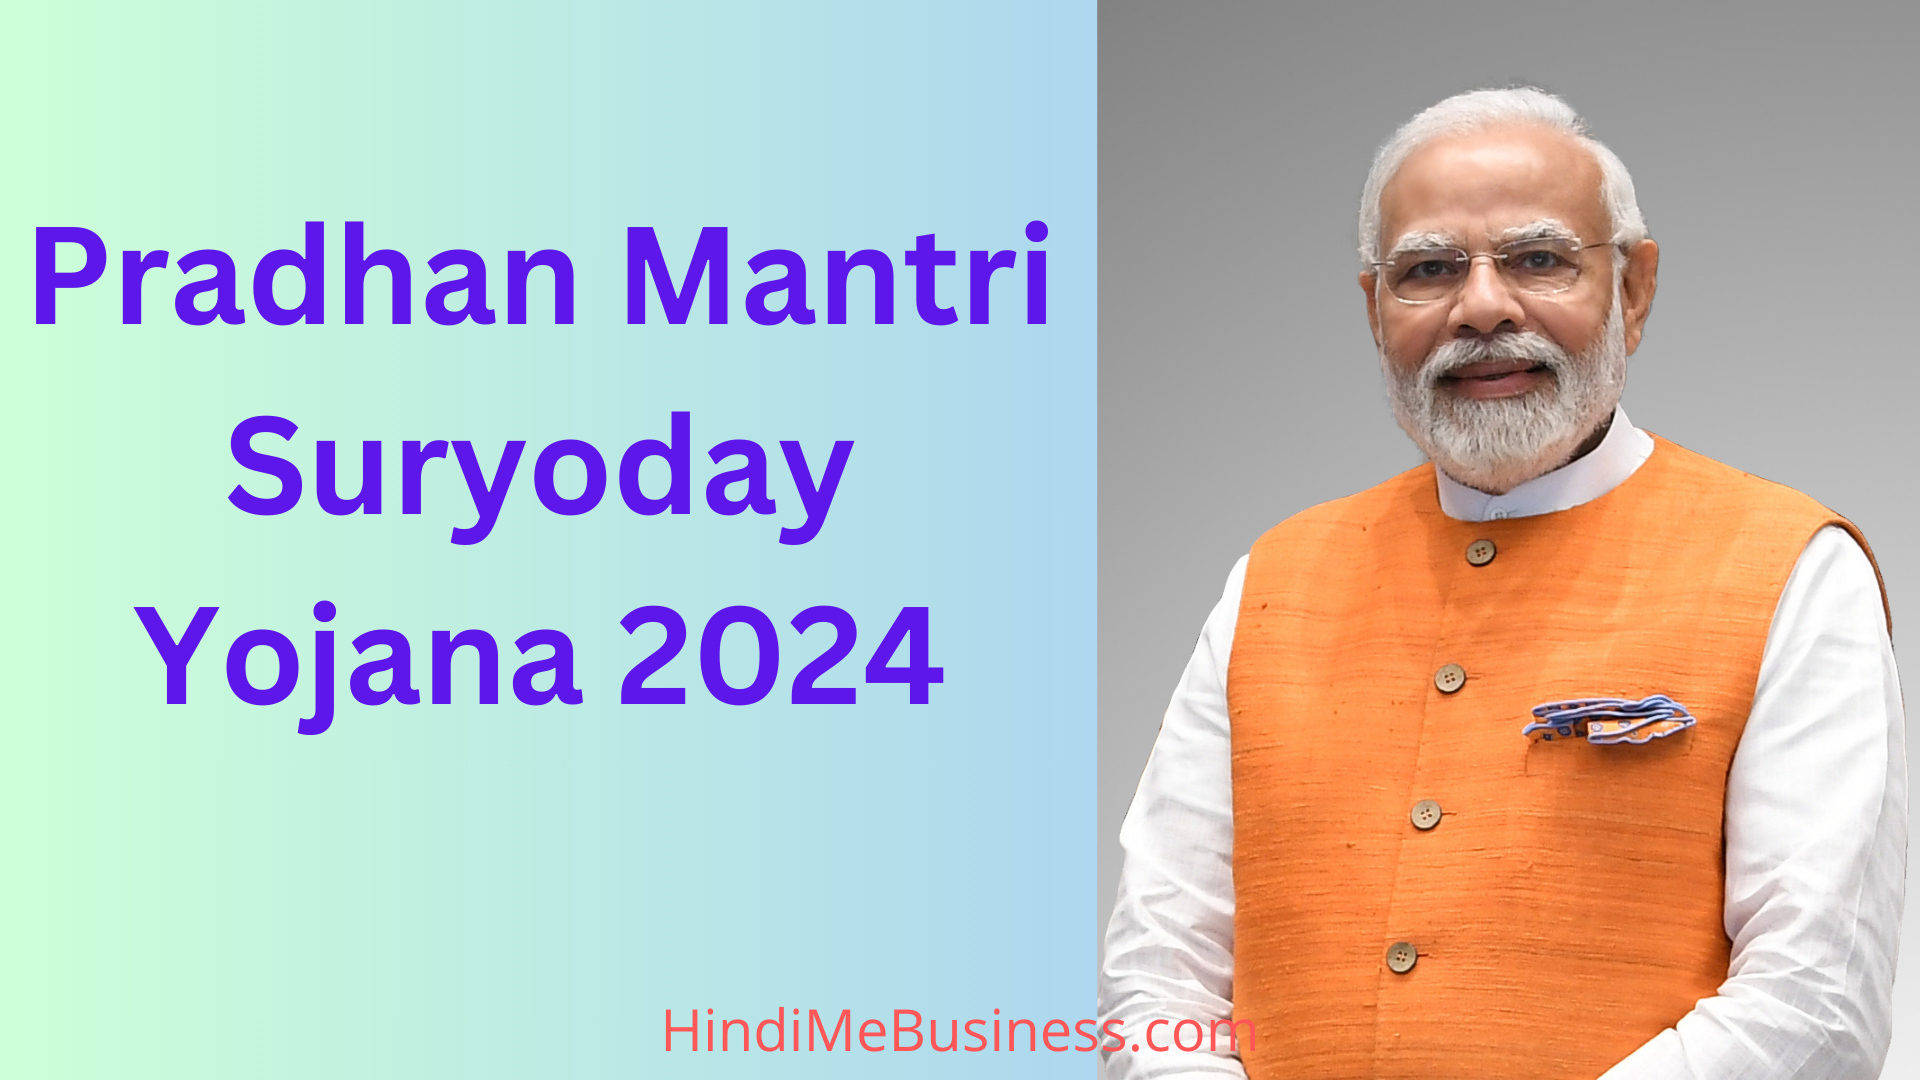 Pradhan Mantri Suryoday Yojana 2024